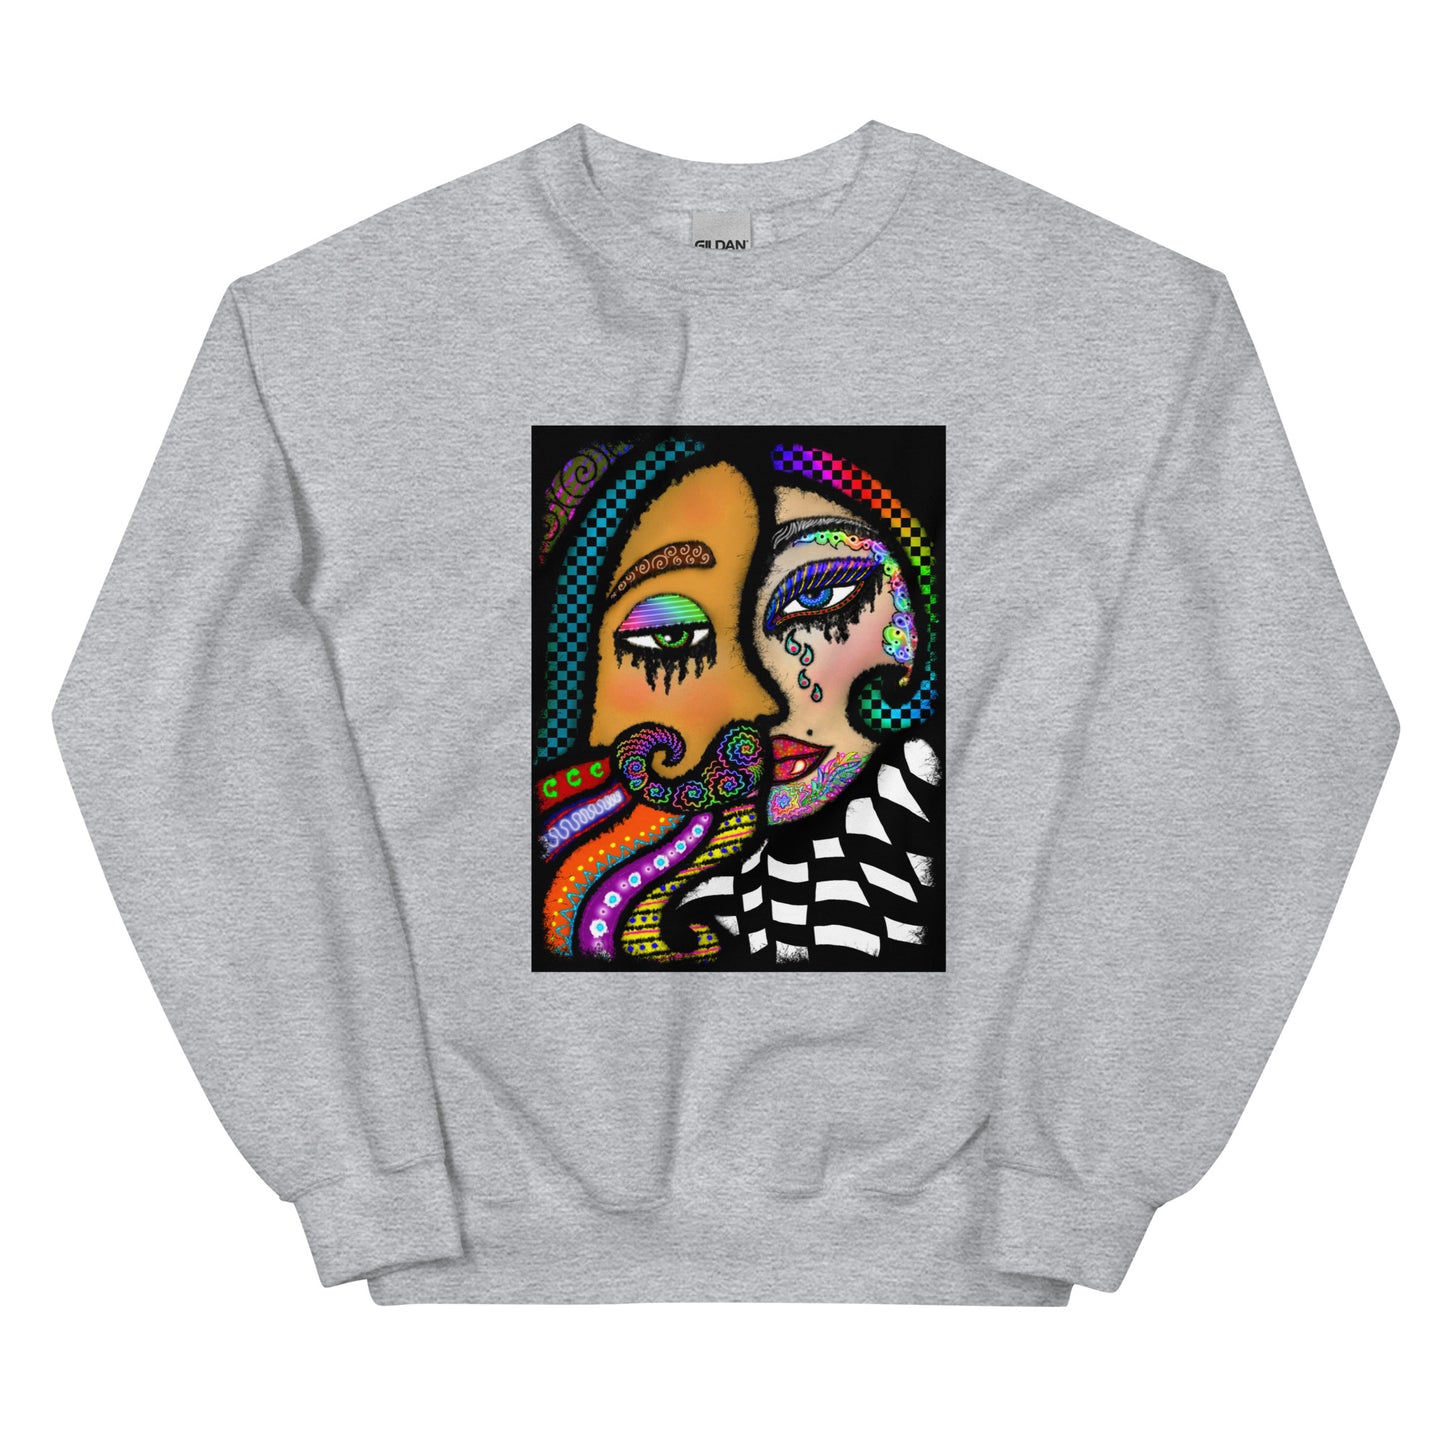 CYRUS THE GREAT Women's Sweatshirt